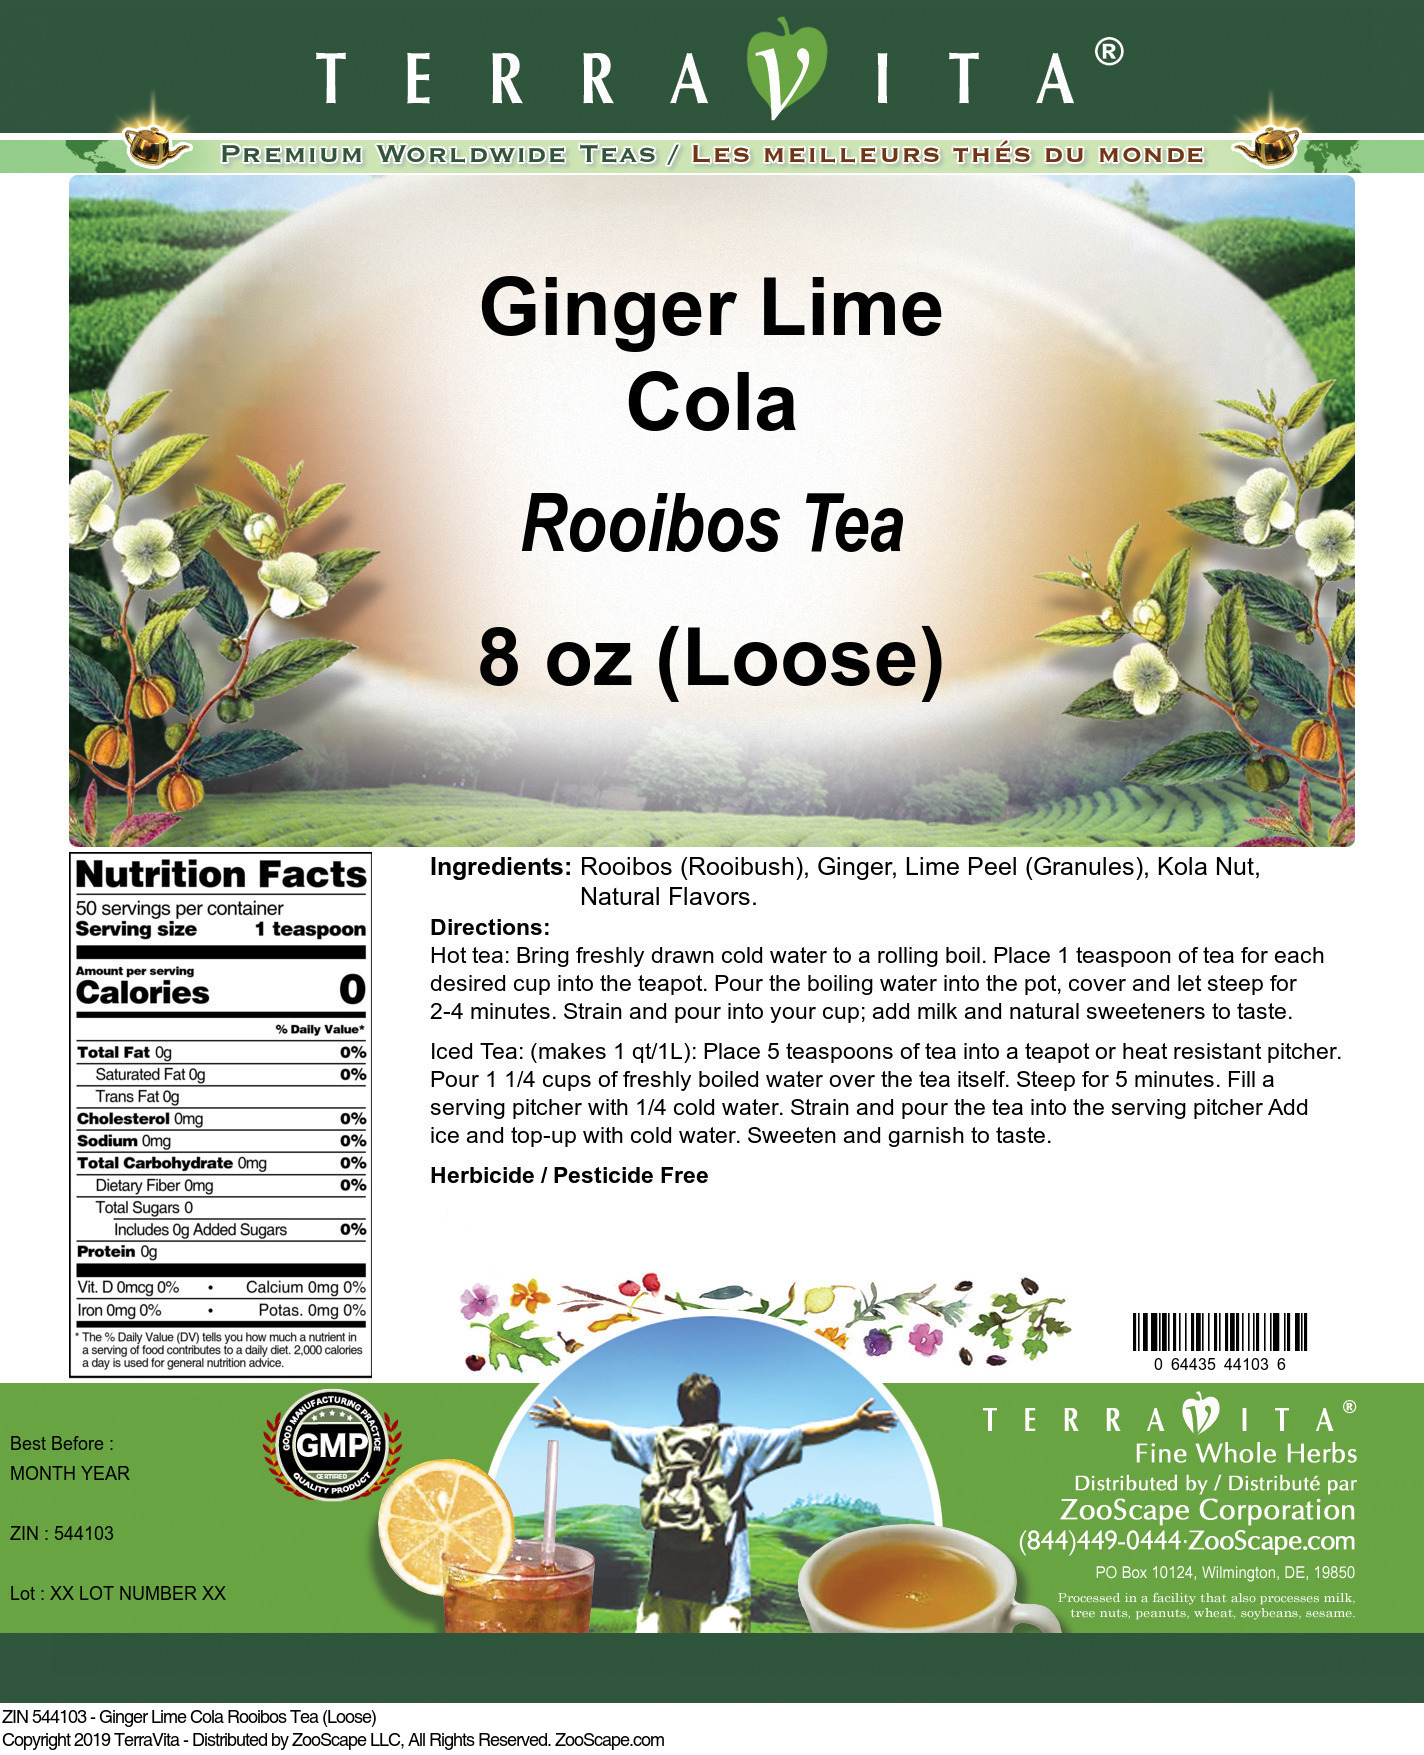 Ginger Lime Cola Rooibos Tea (Loose) - Label